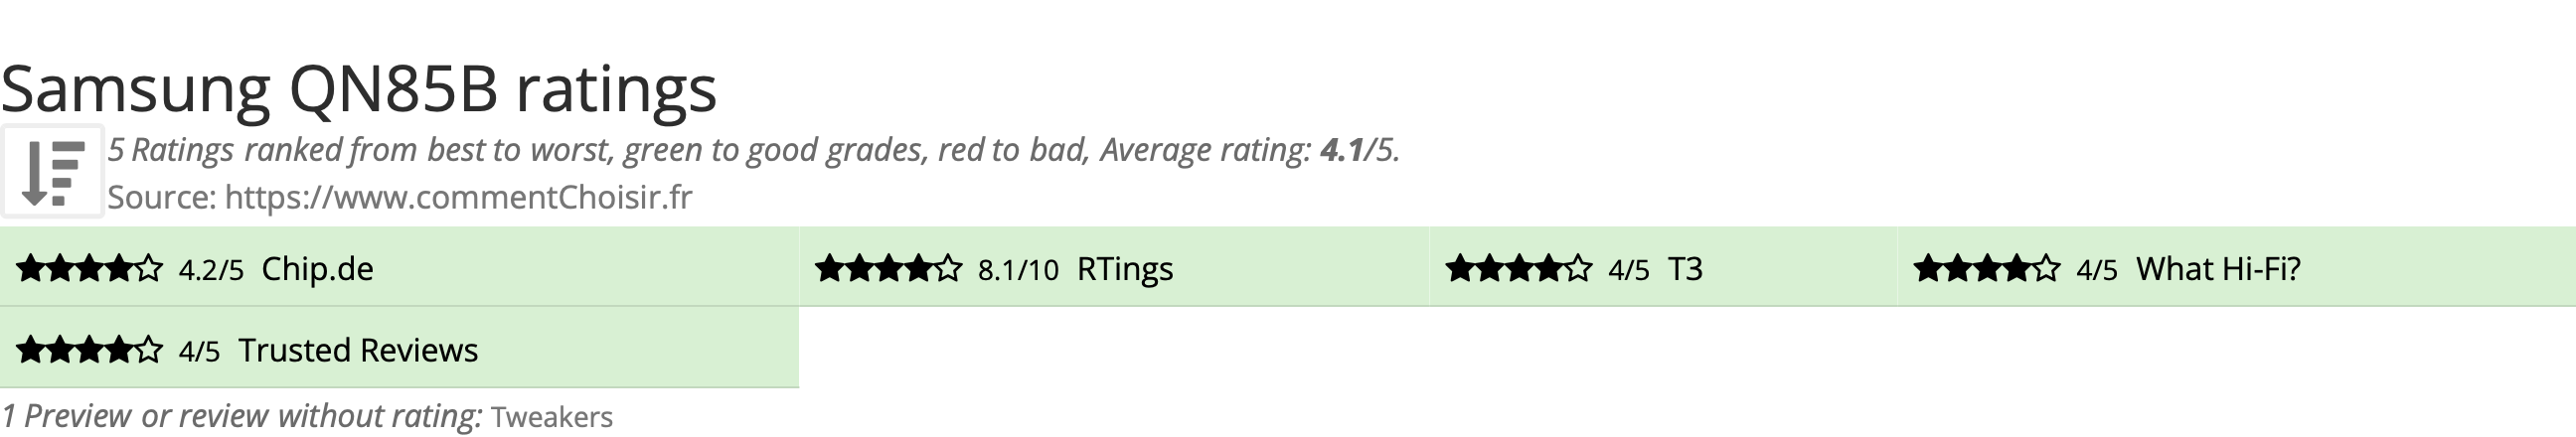 Ratings Samsung QN85B